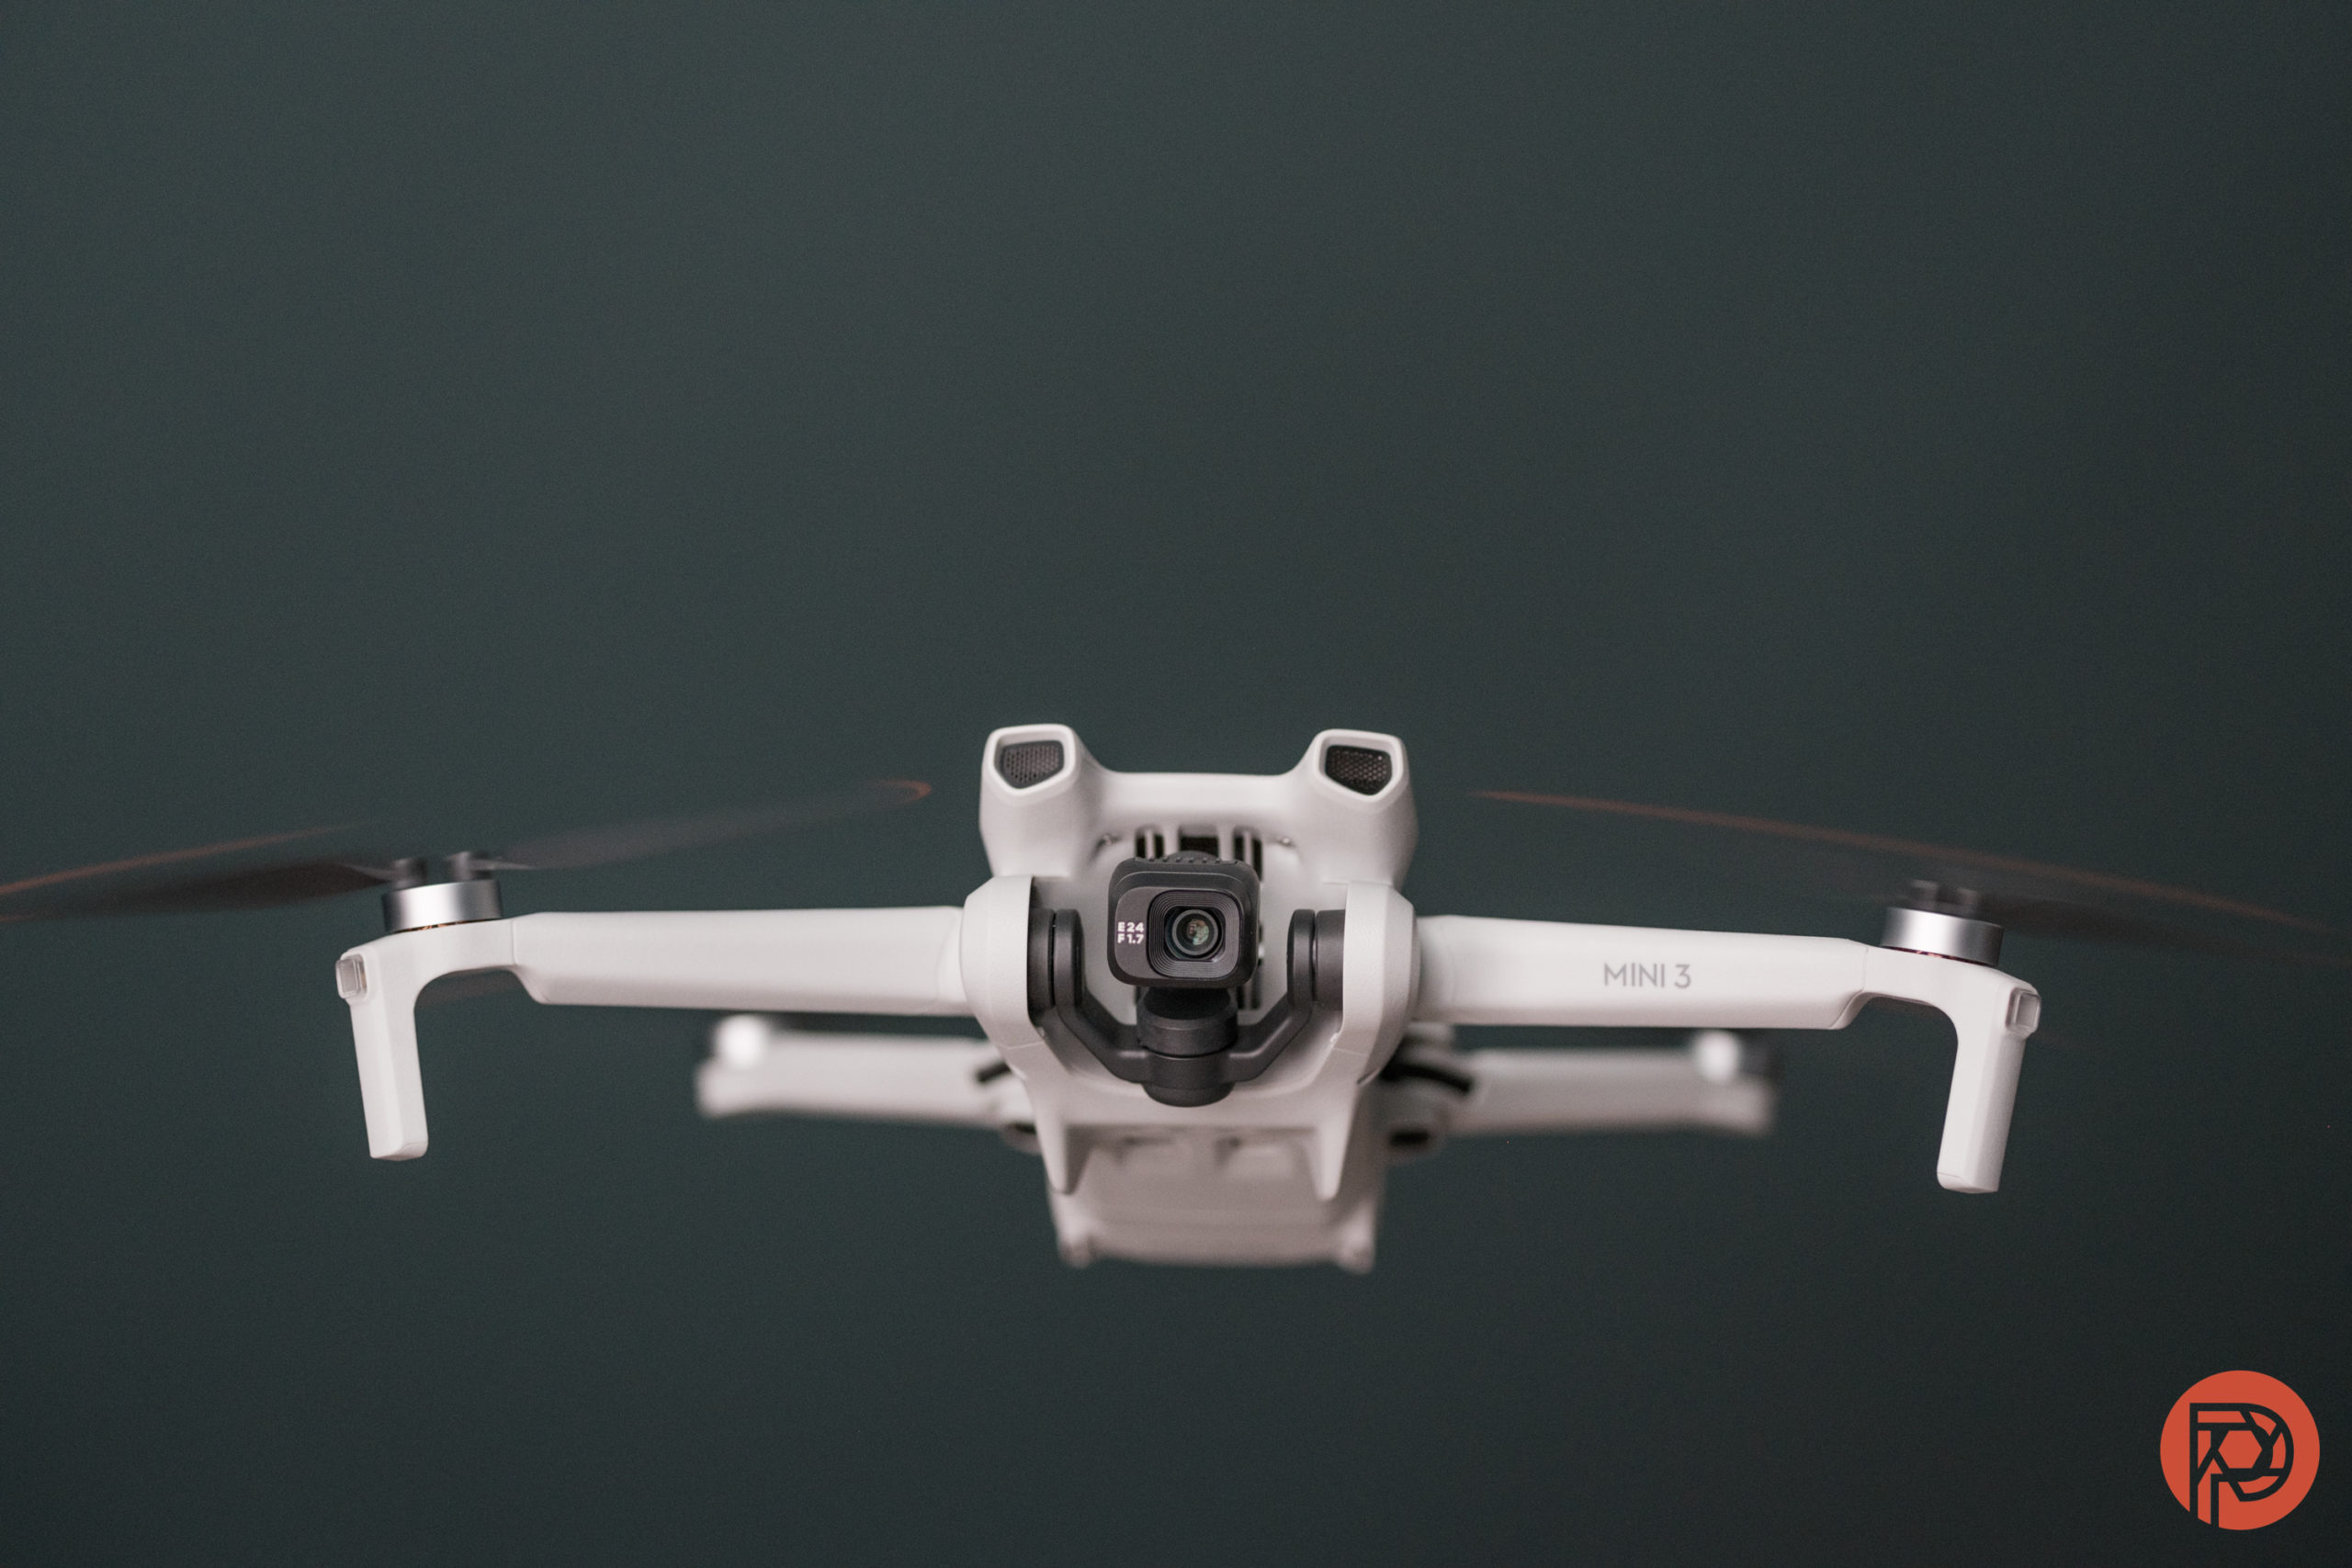 DJI's Mini 3 drone is currently $90 off